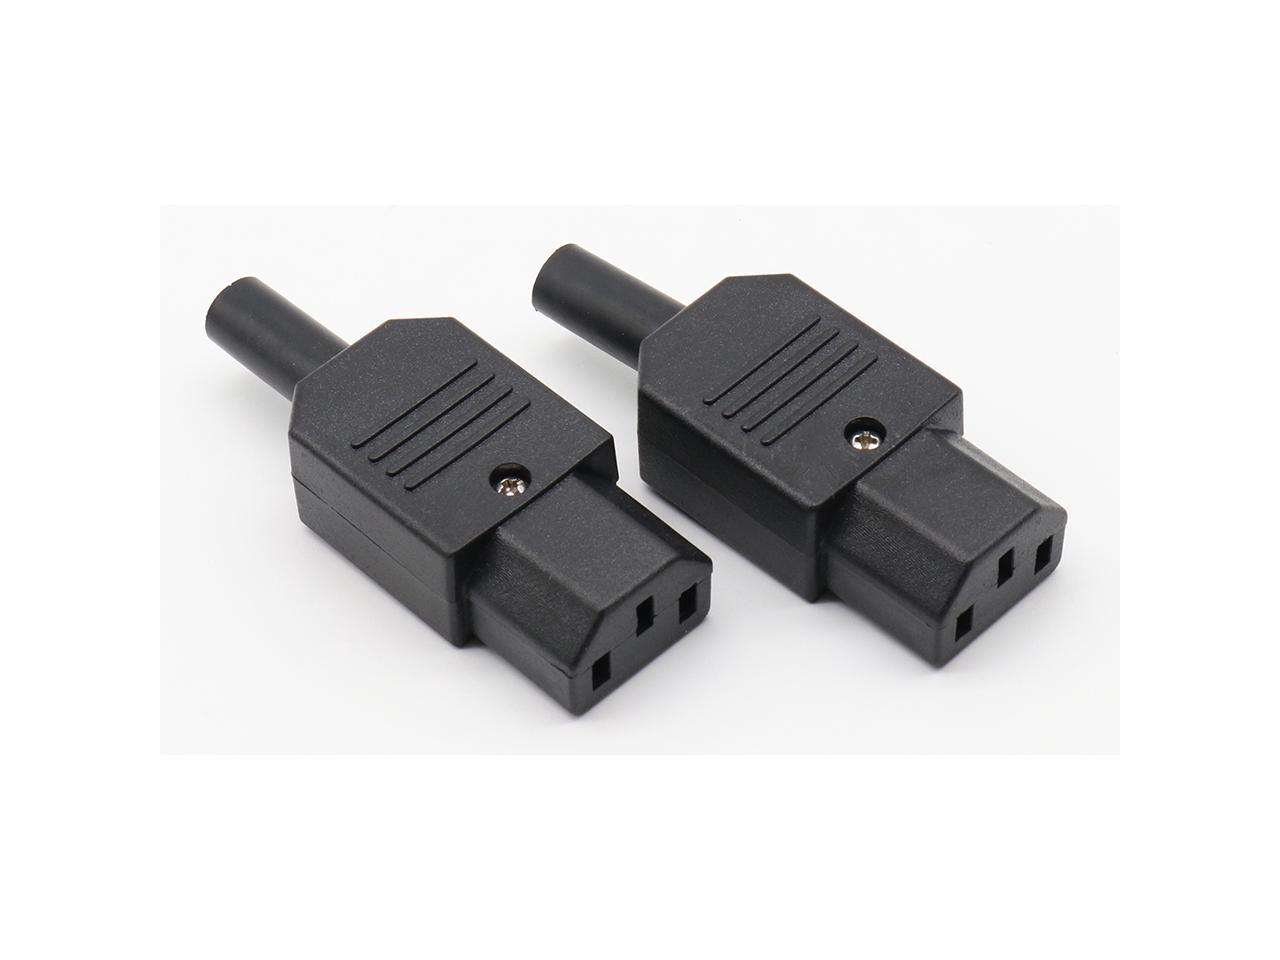 IEC 320 C13 Female Plug Adapter 3pin Socket Power Cord Rewirable Connector  LD 